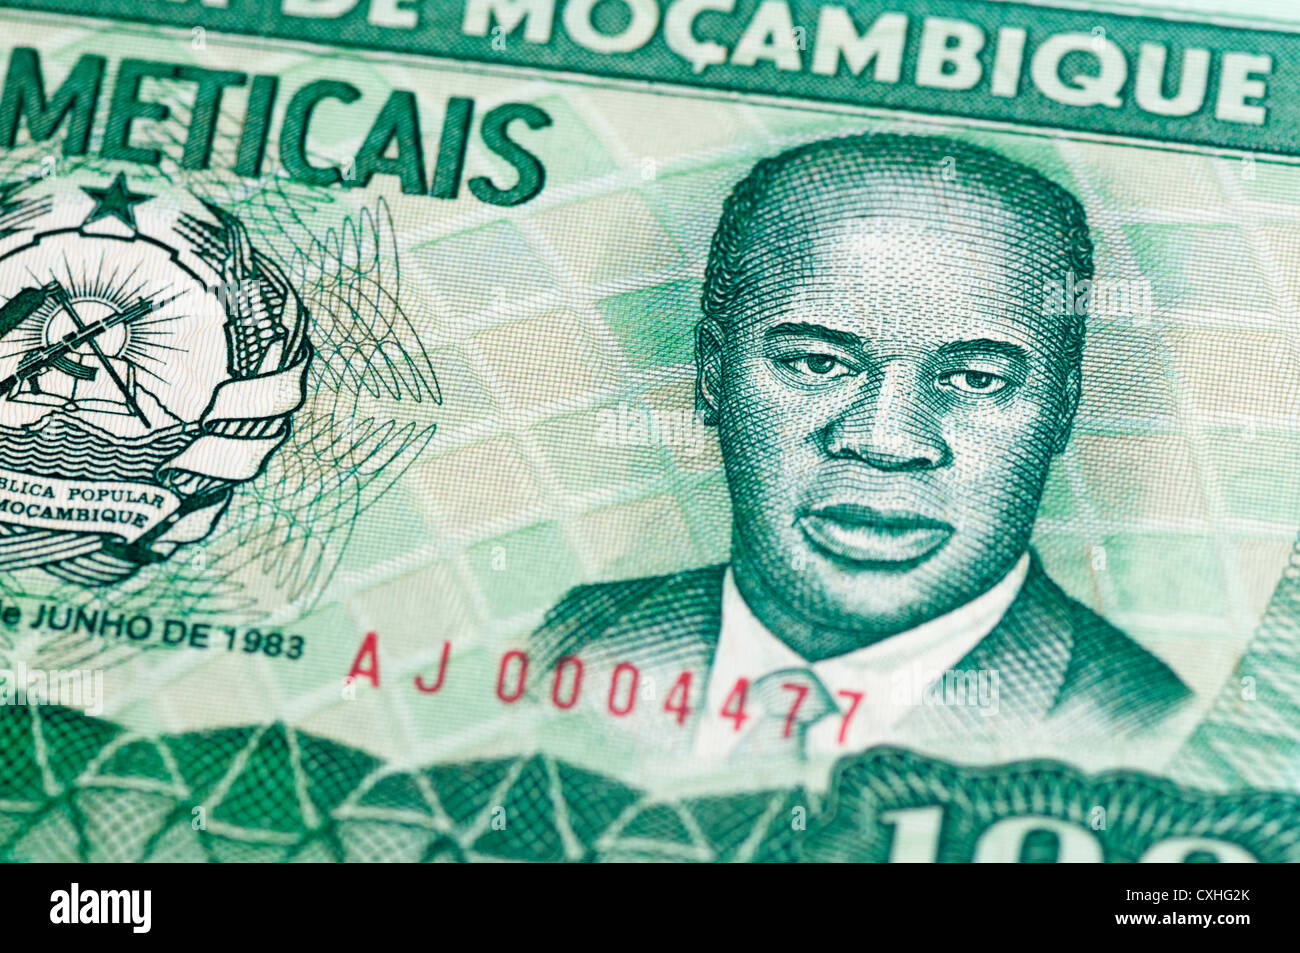 Mozambiquian 100 Metical banknote Stock Photo